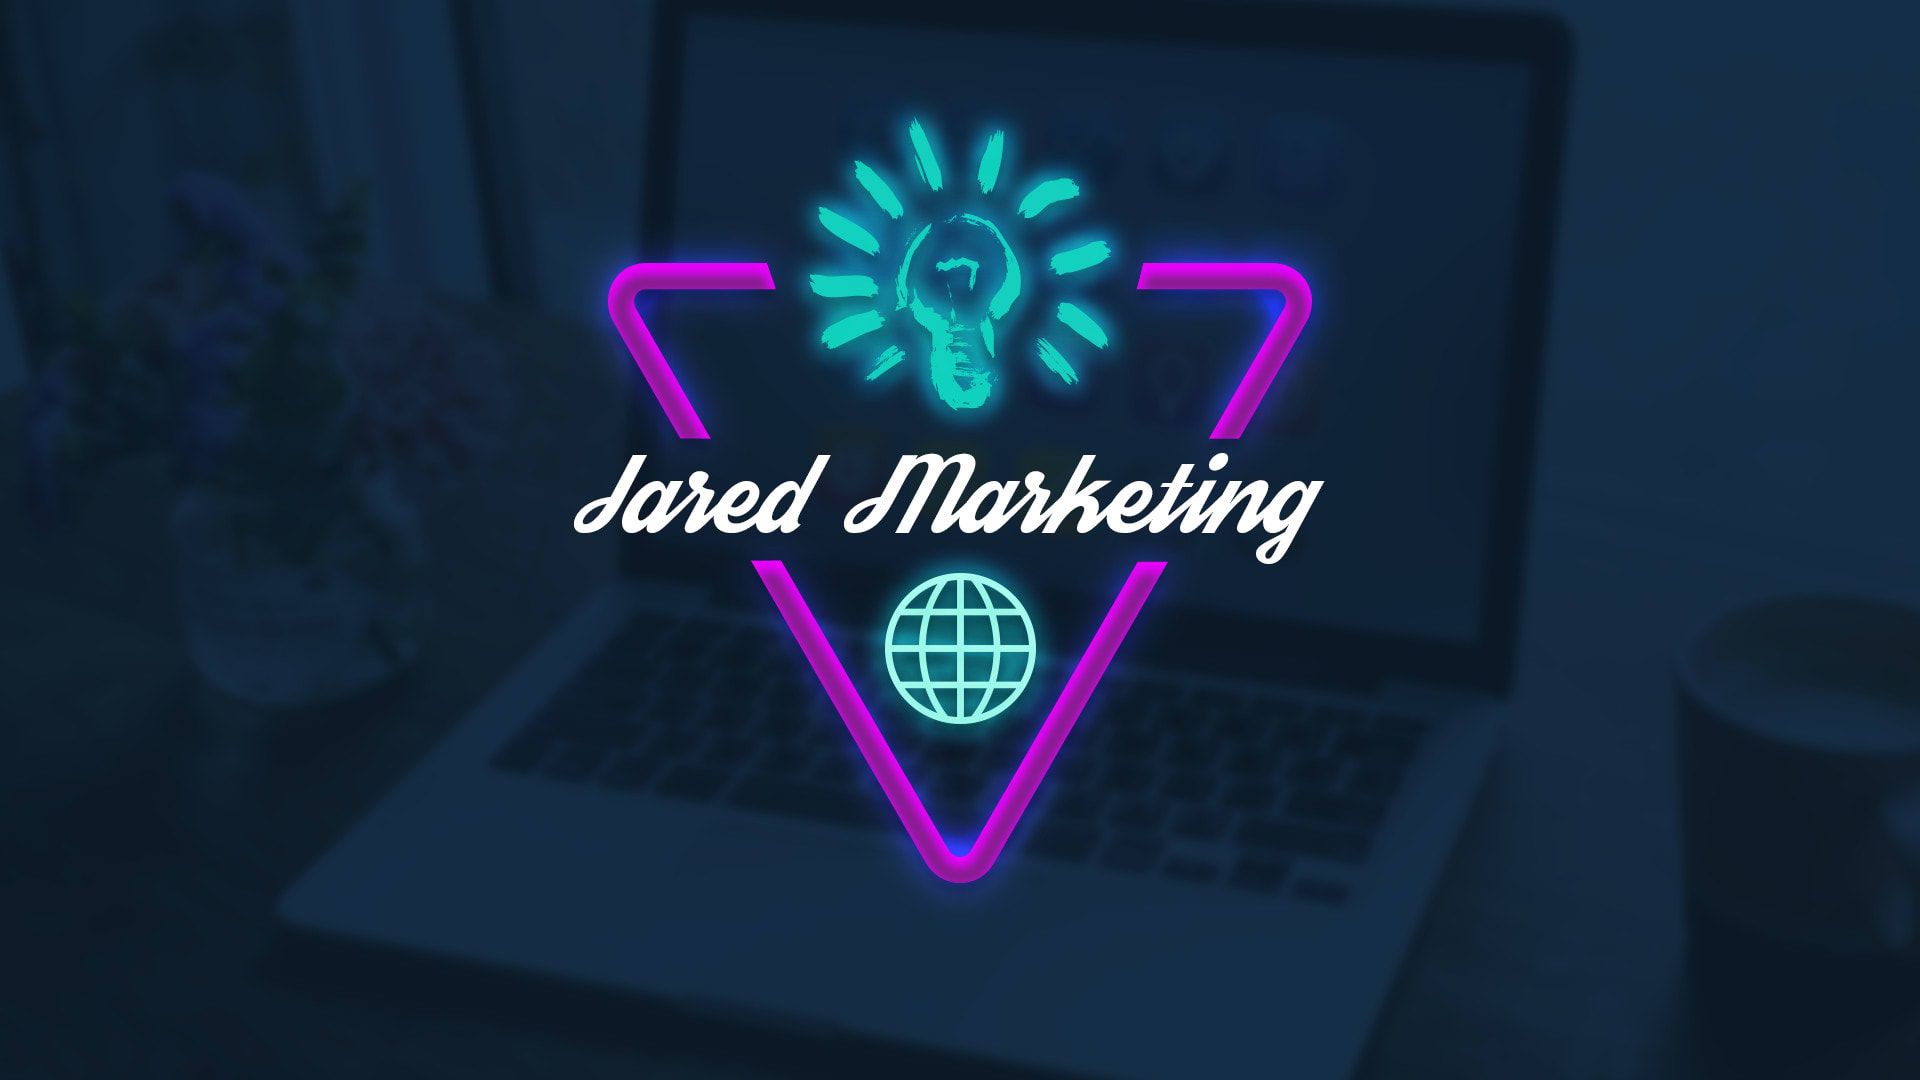 Jared Marketing & Design